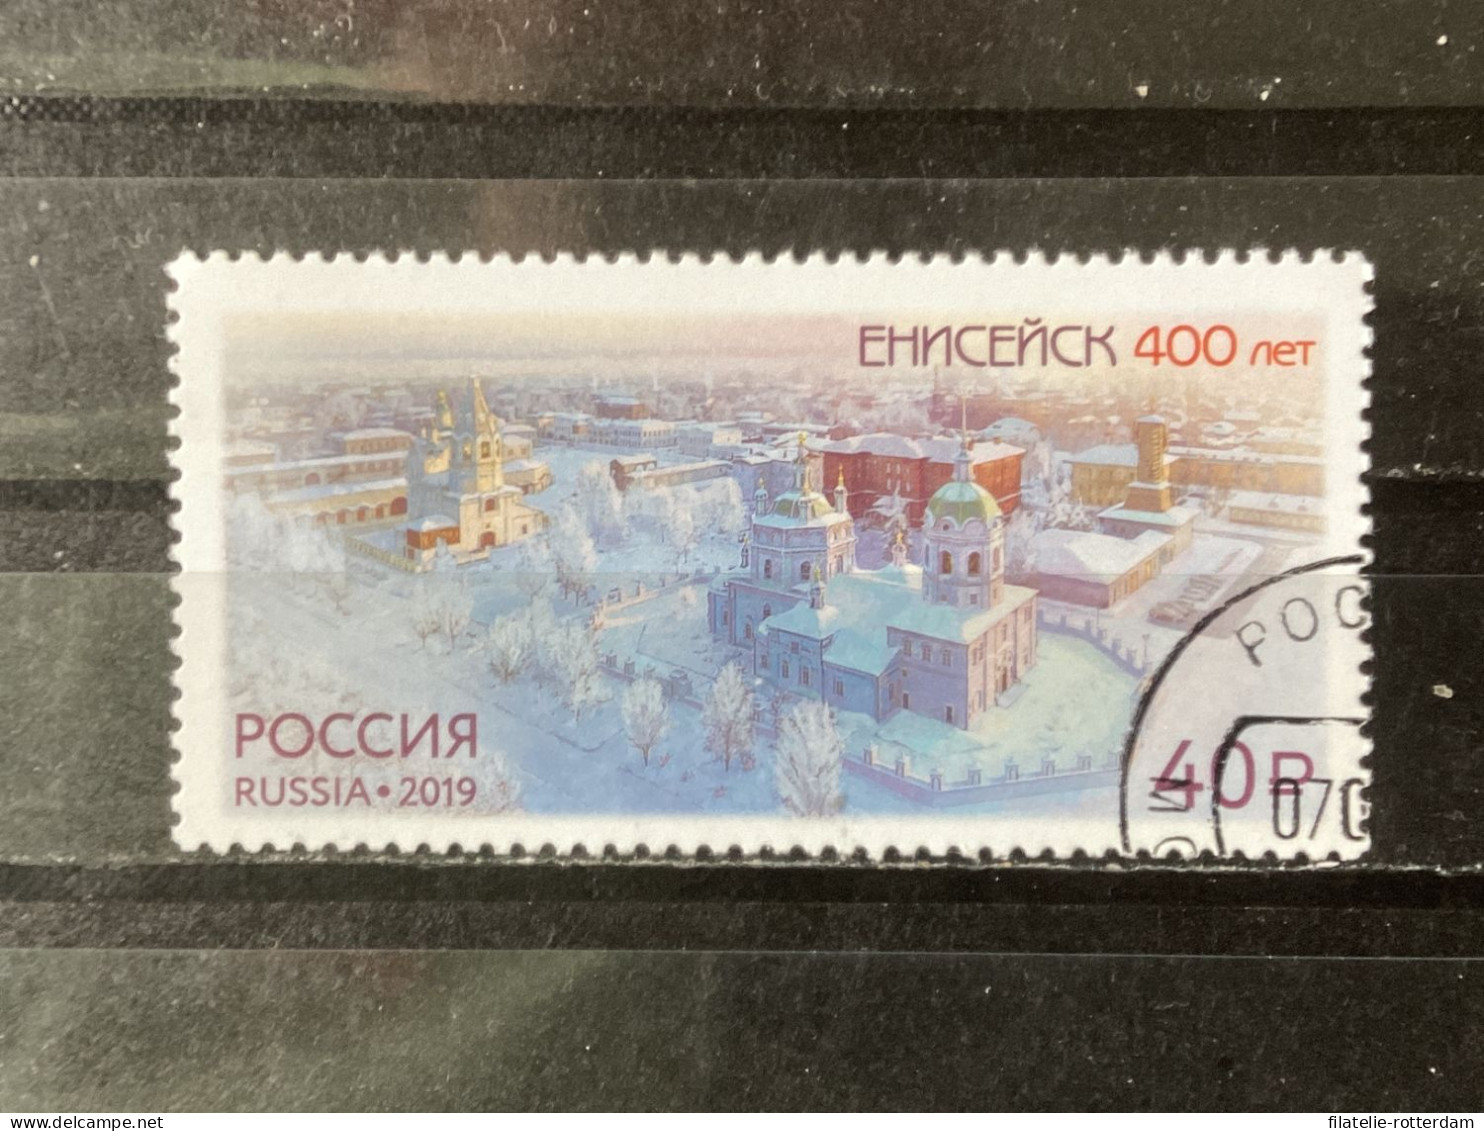 Russia / Rusland - City Of Yeniseysk (40) 2019 - Usados